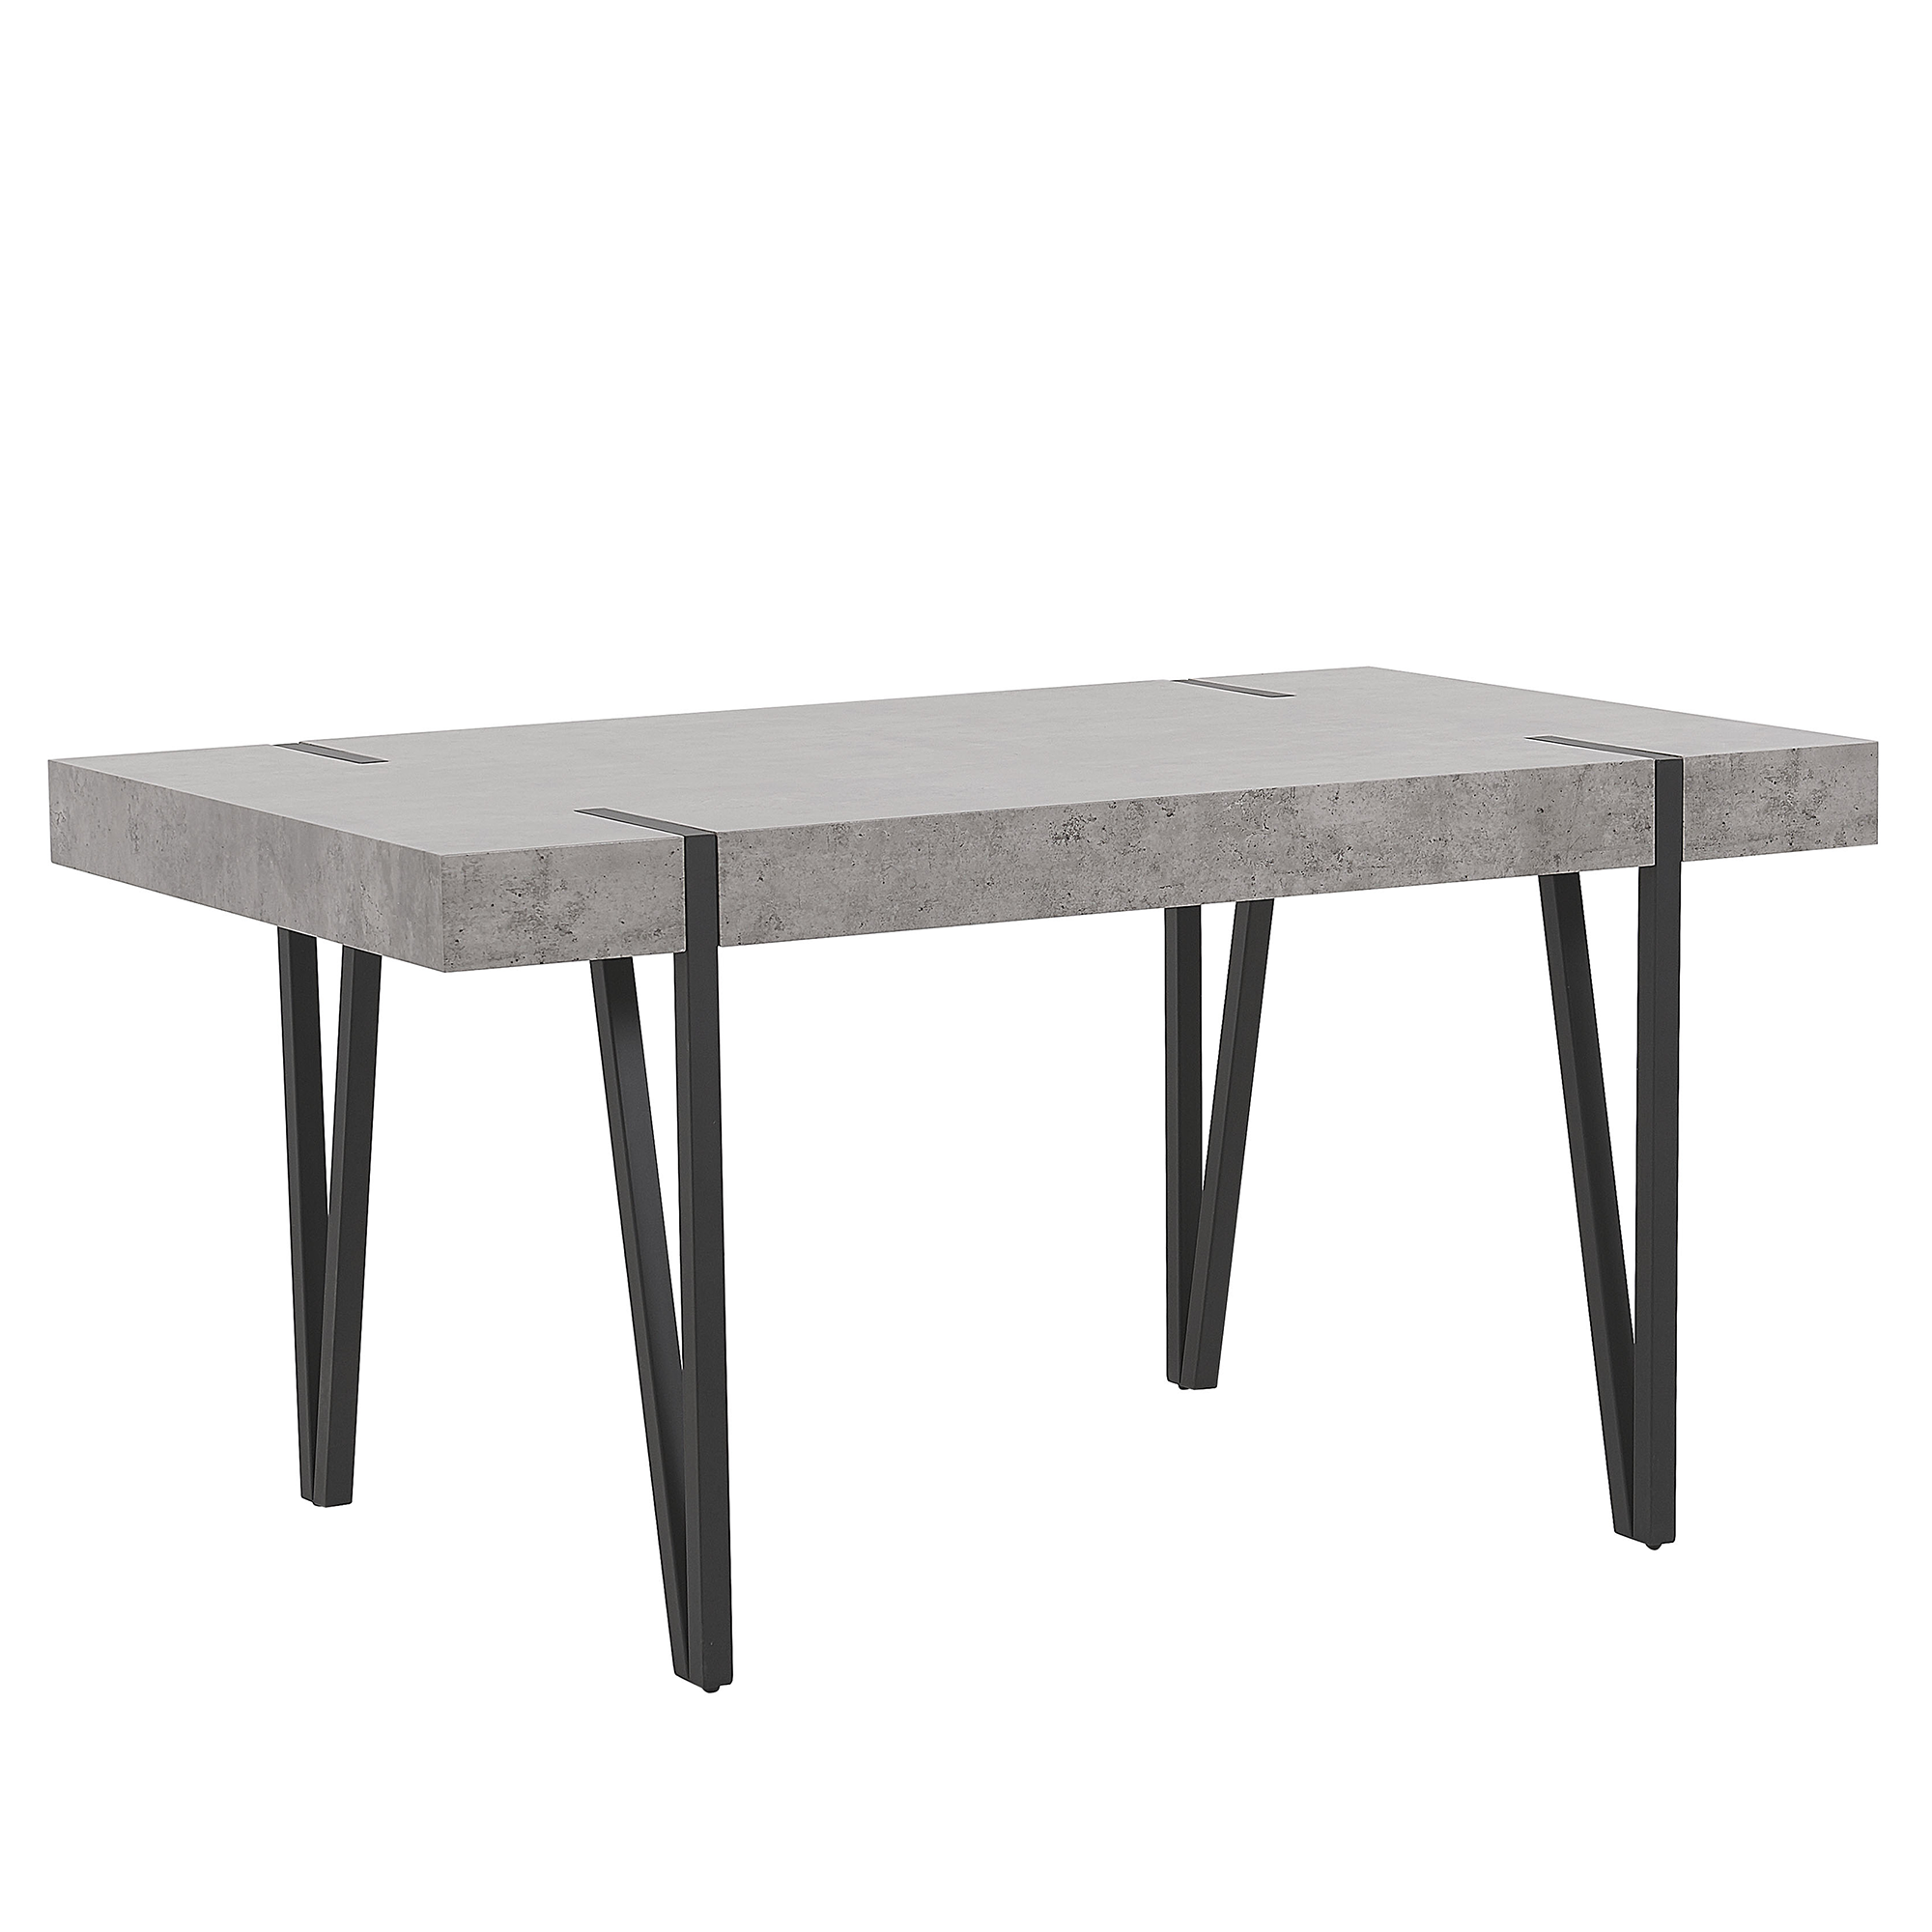 Beliani Dining Table Concrete Effect MDF Top Black Metal Hairpin Legs 150 x 90 cm Rectangular Industrial Style